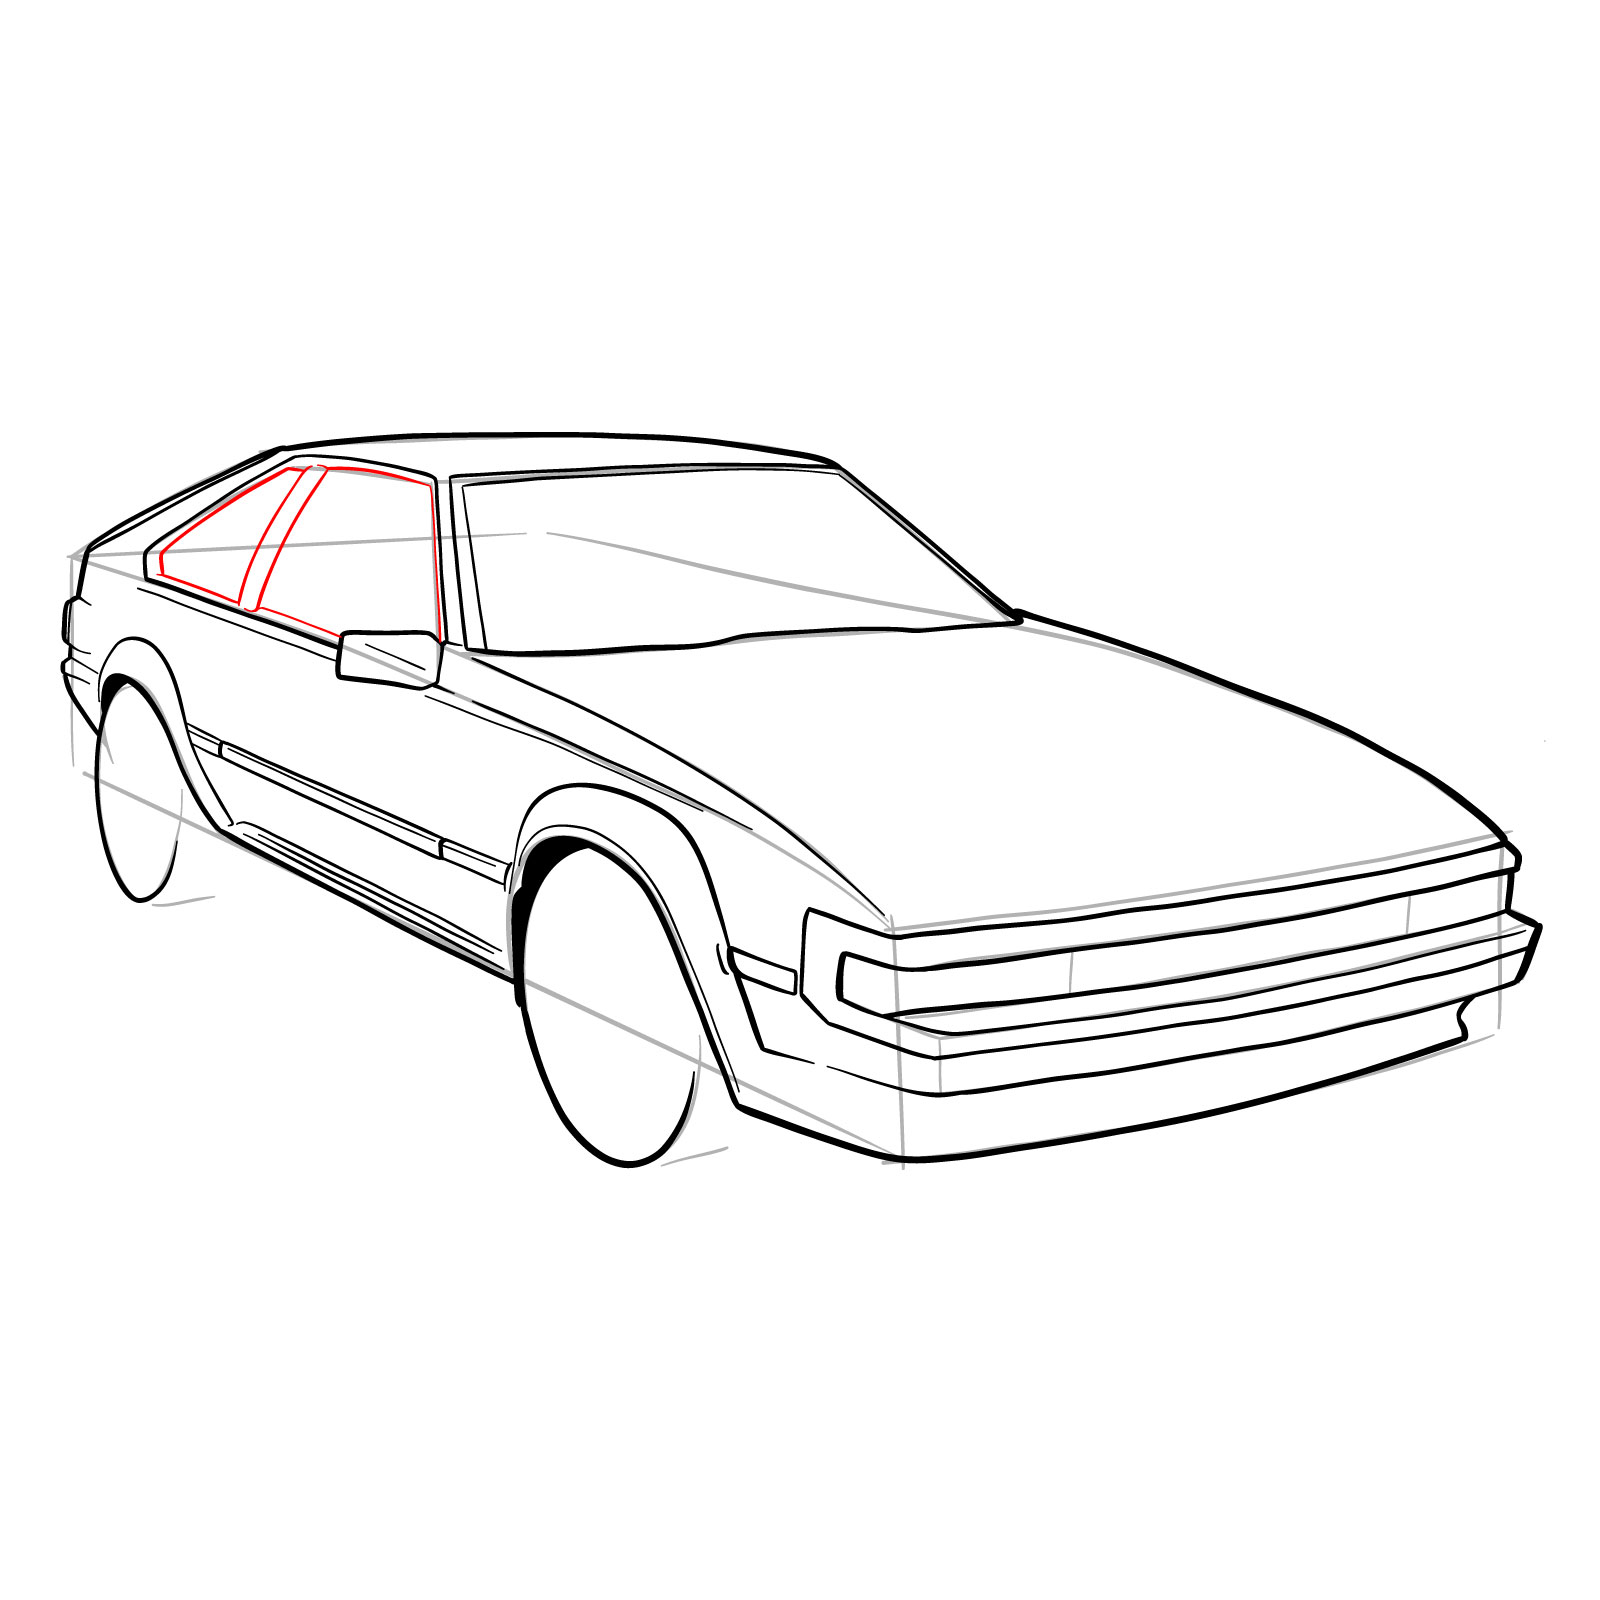 How to draw a 1985 Toyota Celica Supra P Type MK 2 - step 24